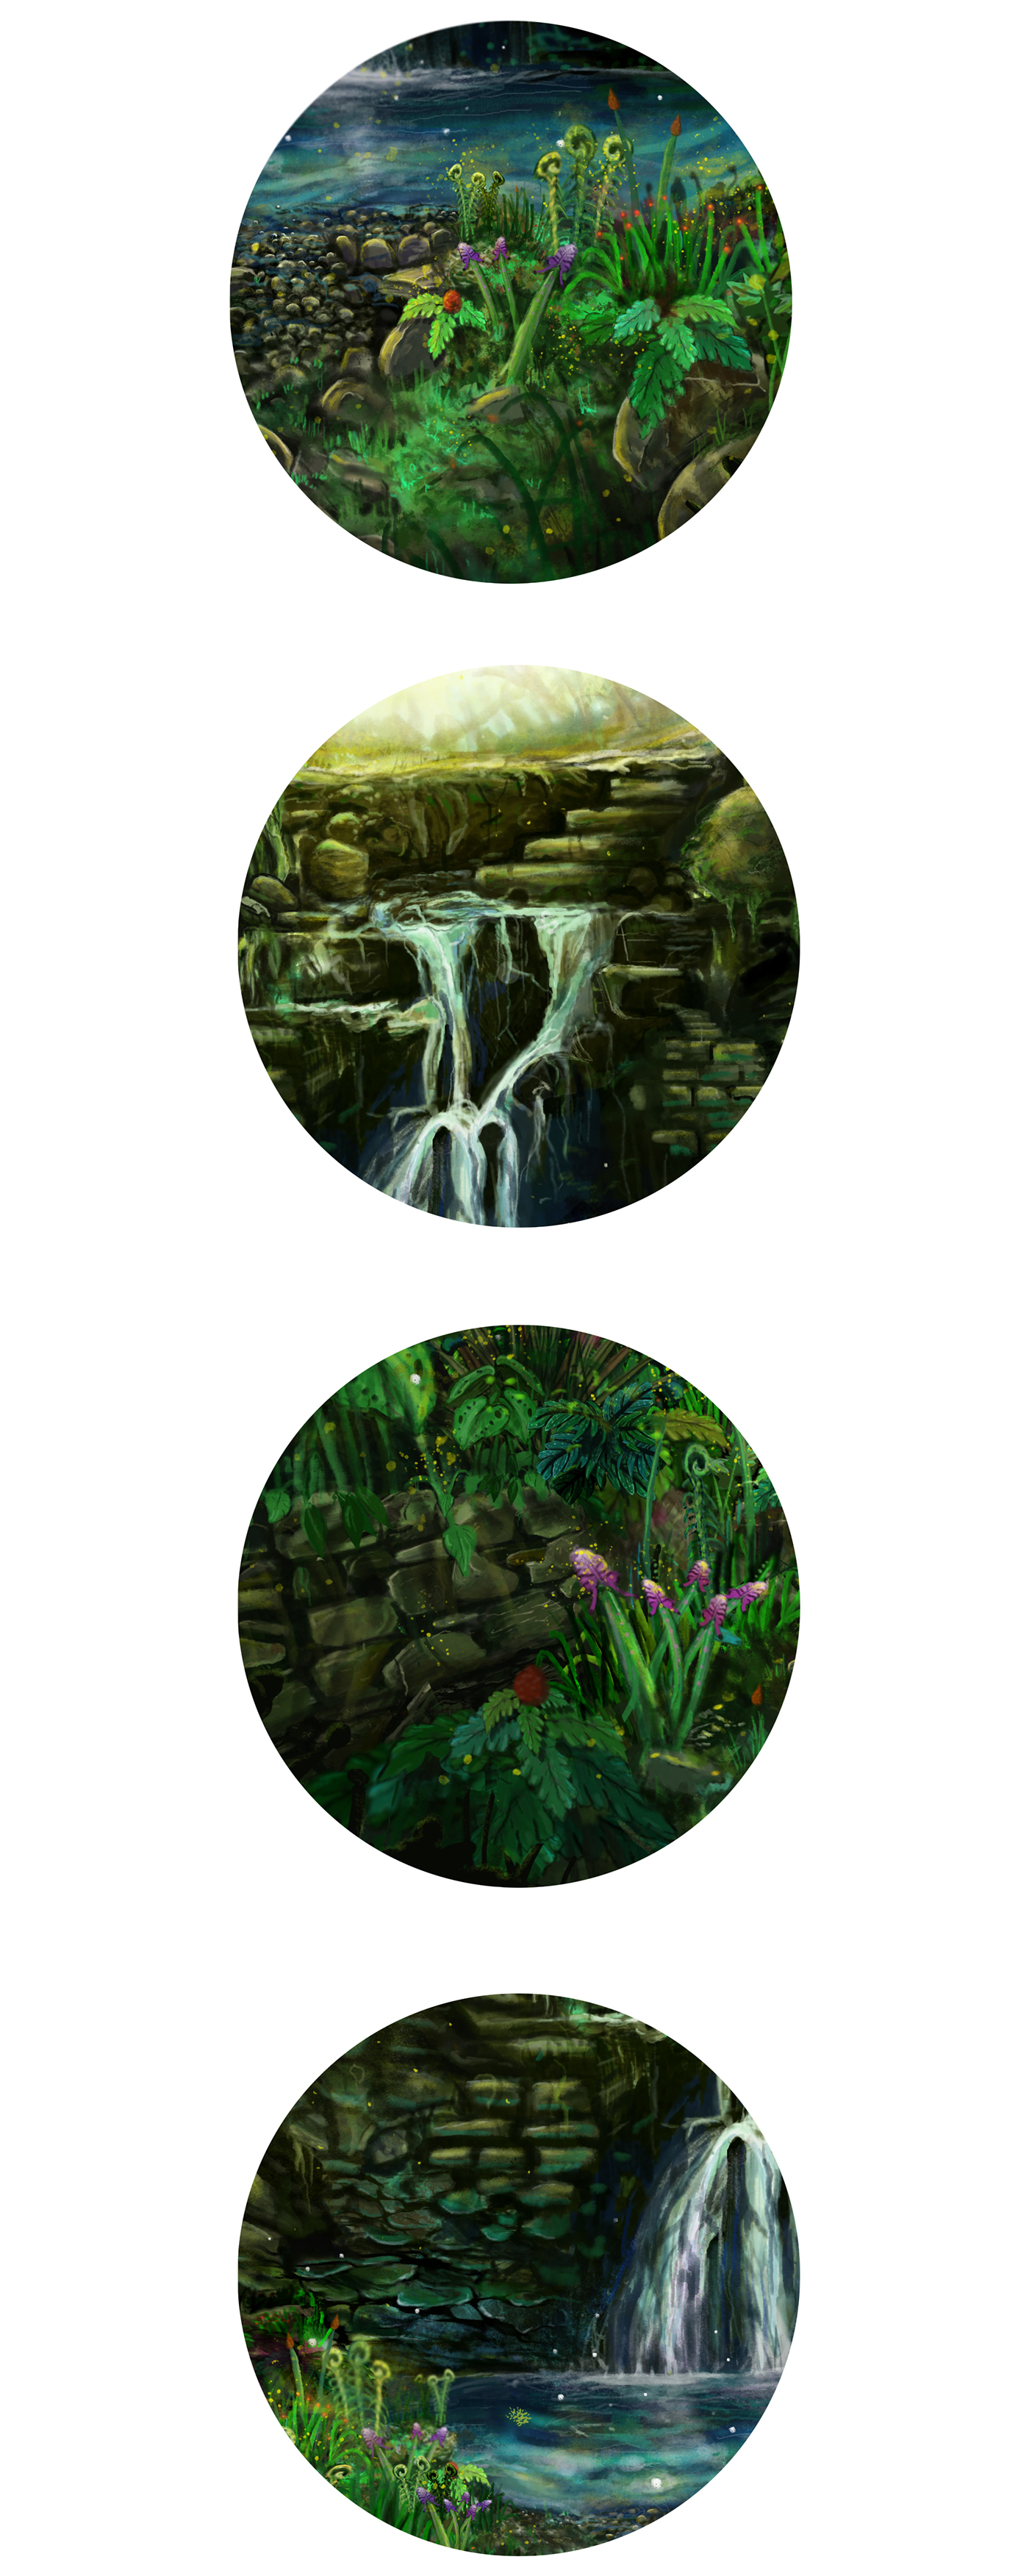 concept art scene design Landscape cave plants underground waterfall fantasy video game Nature